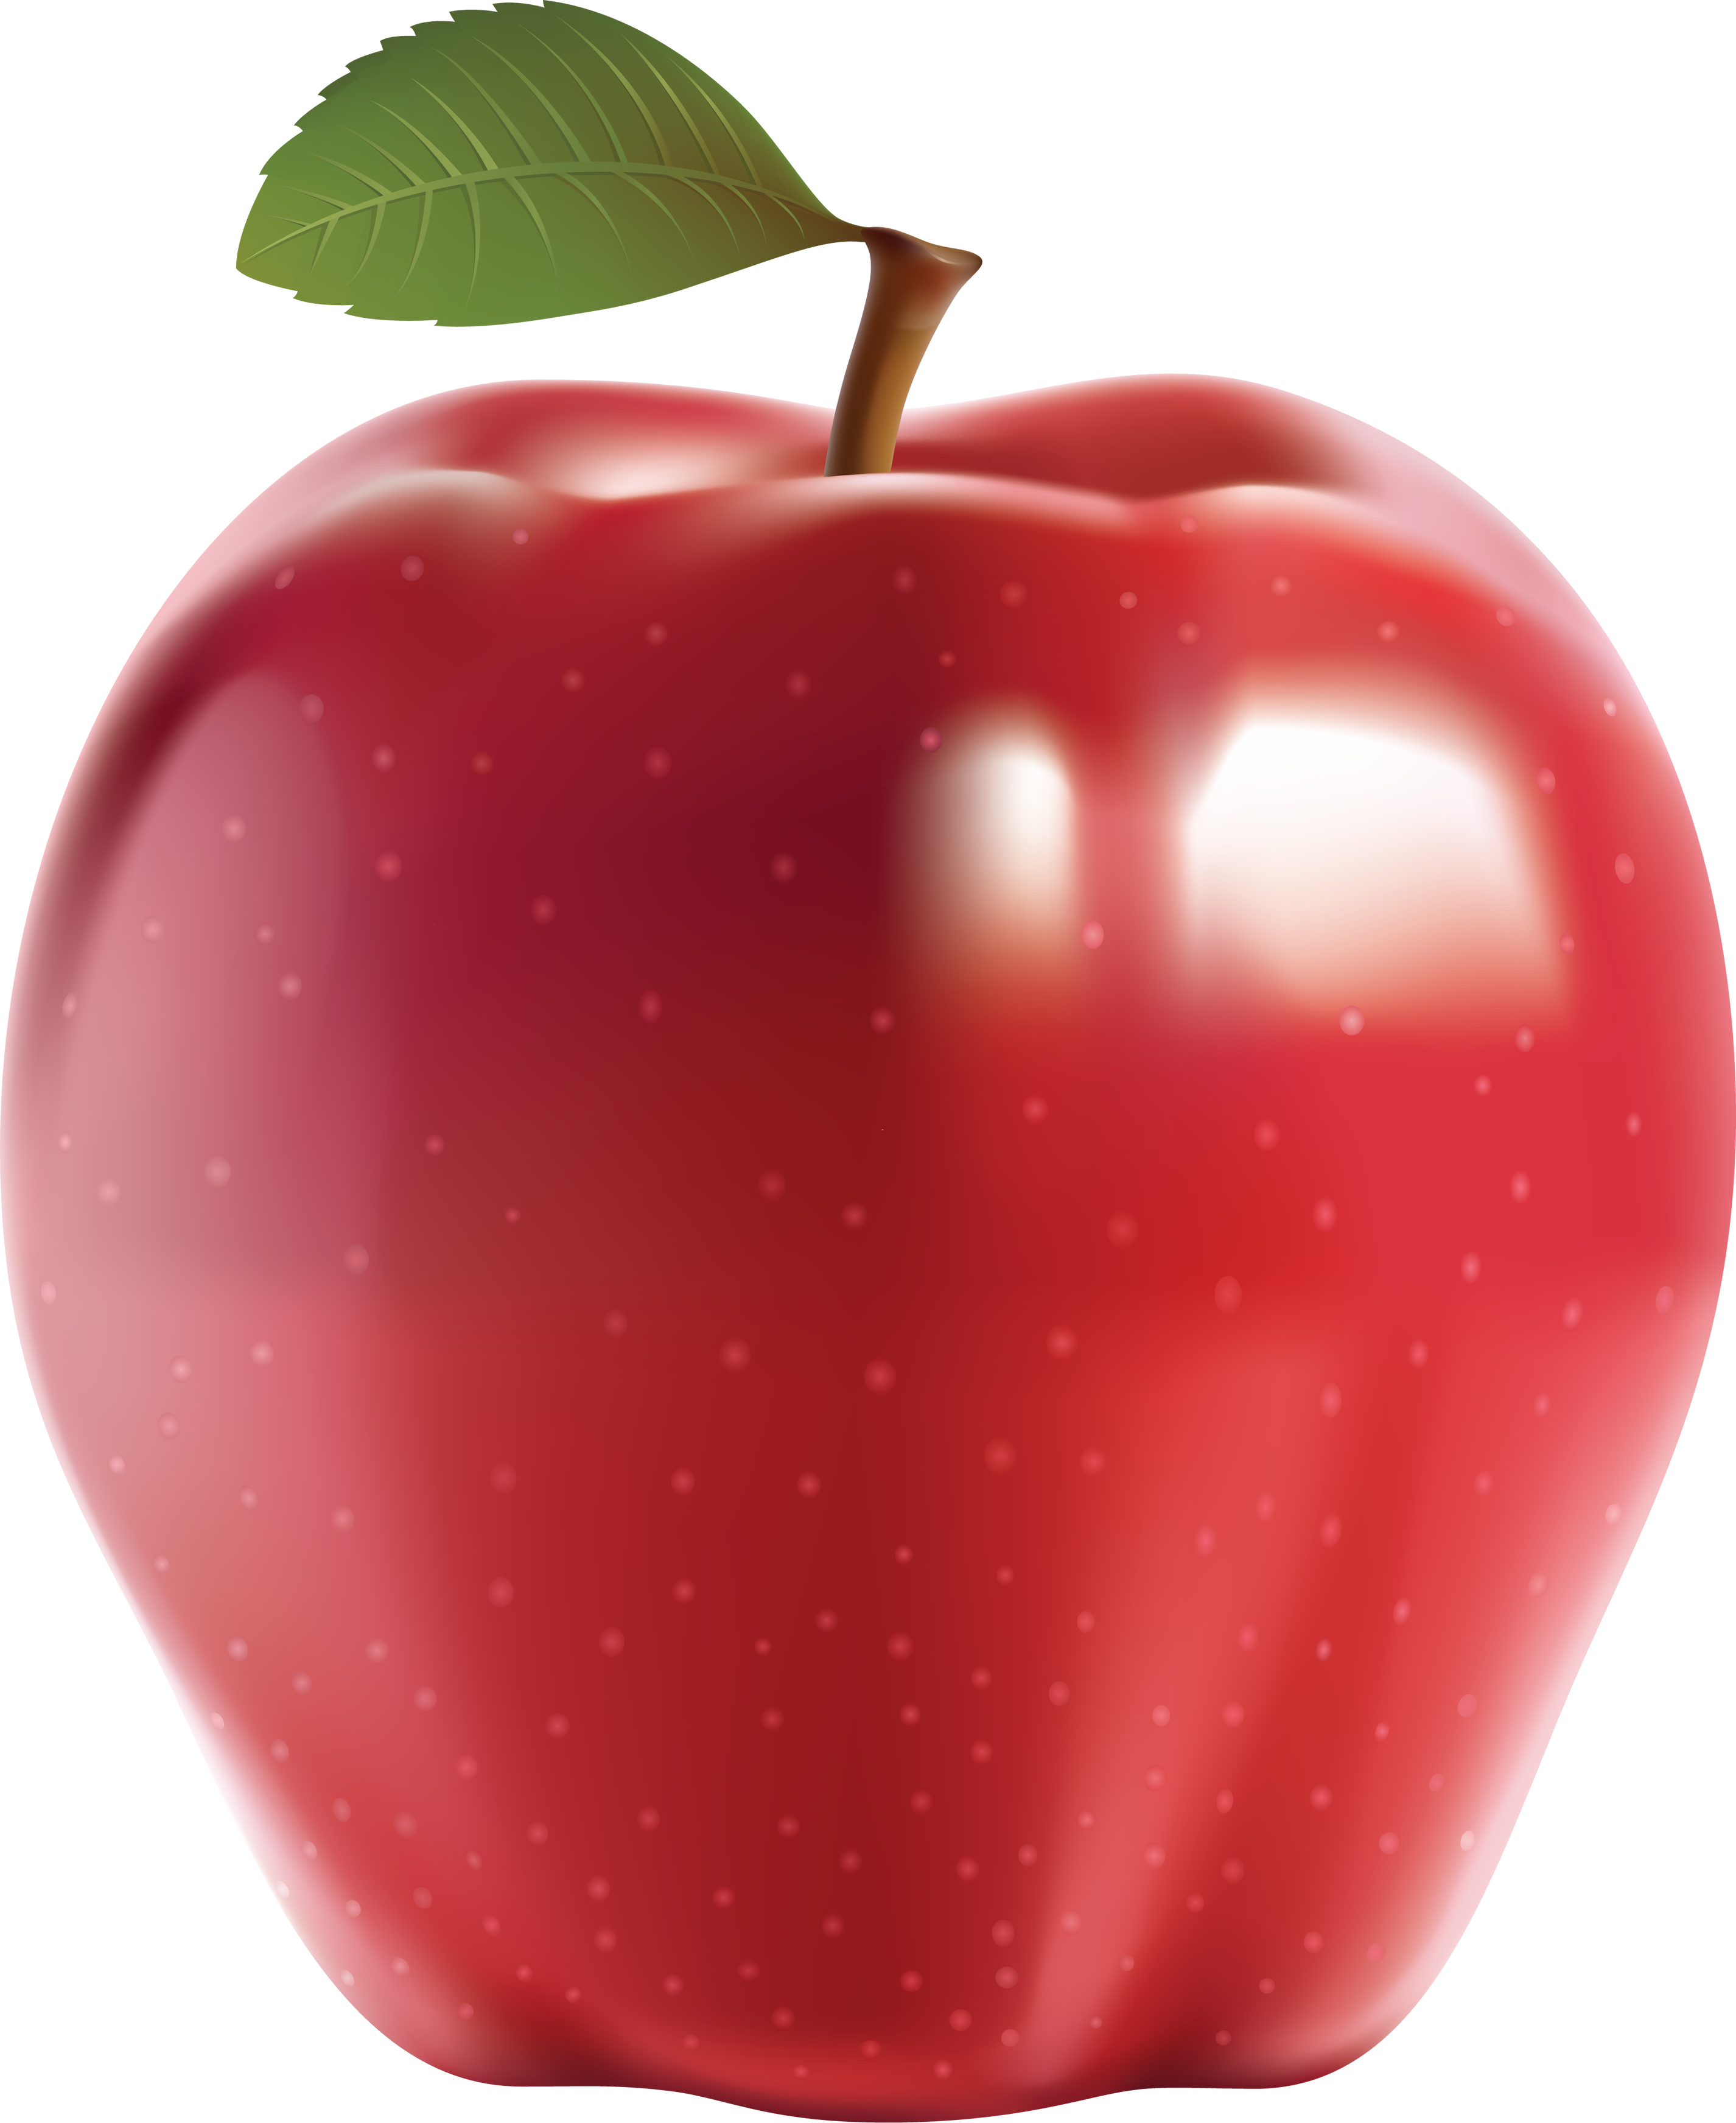 Latar belakang Gambar PNG buah apel merah